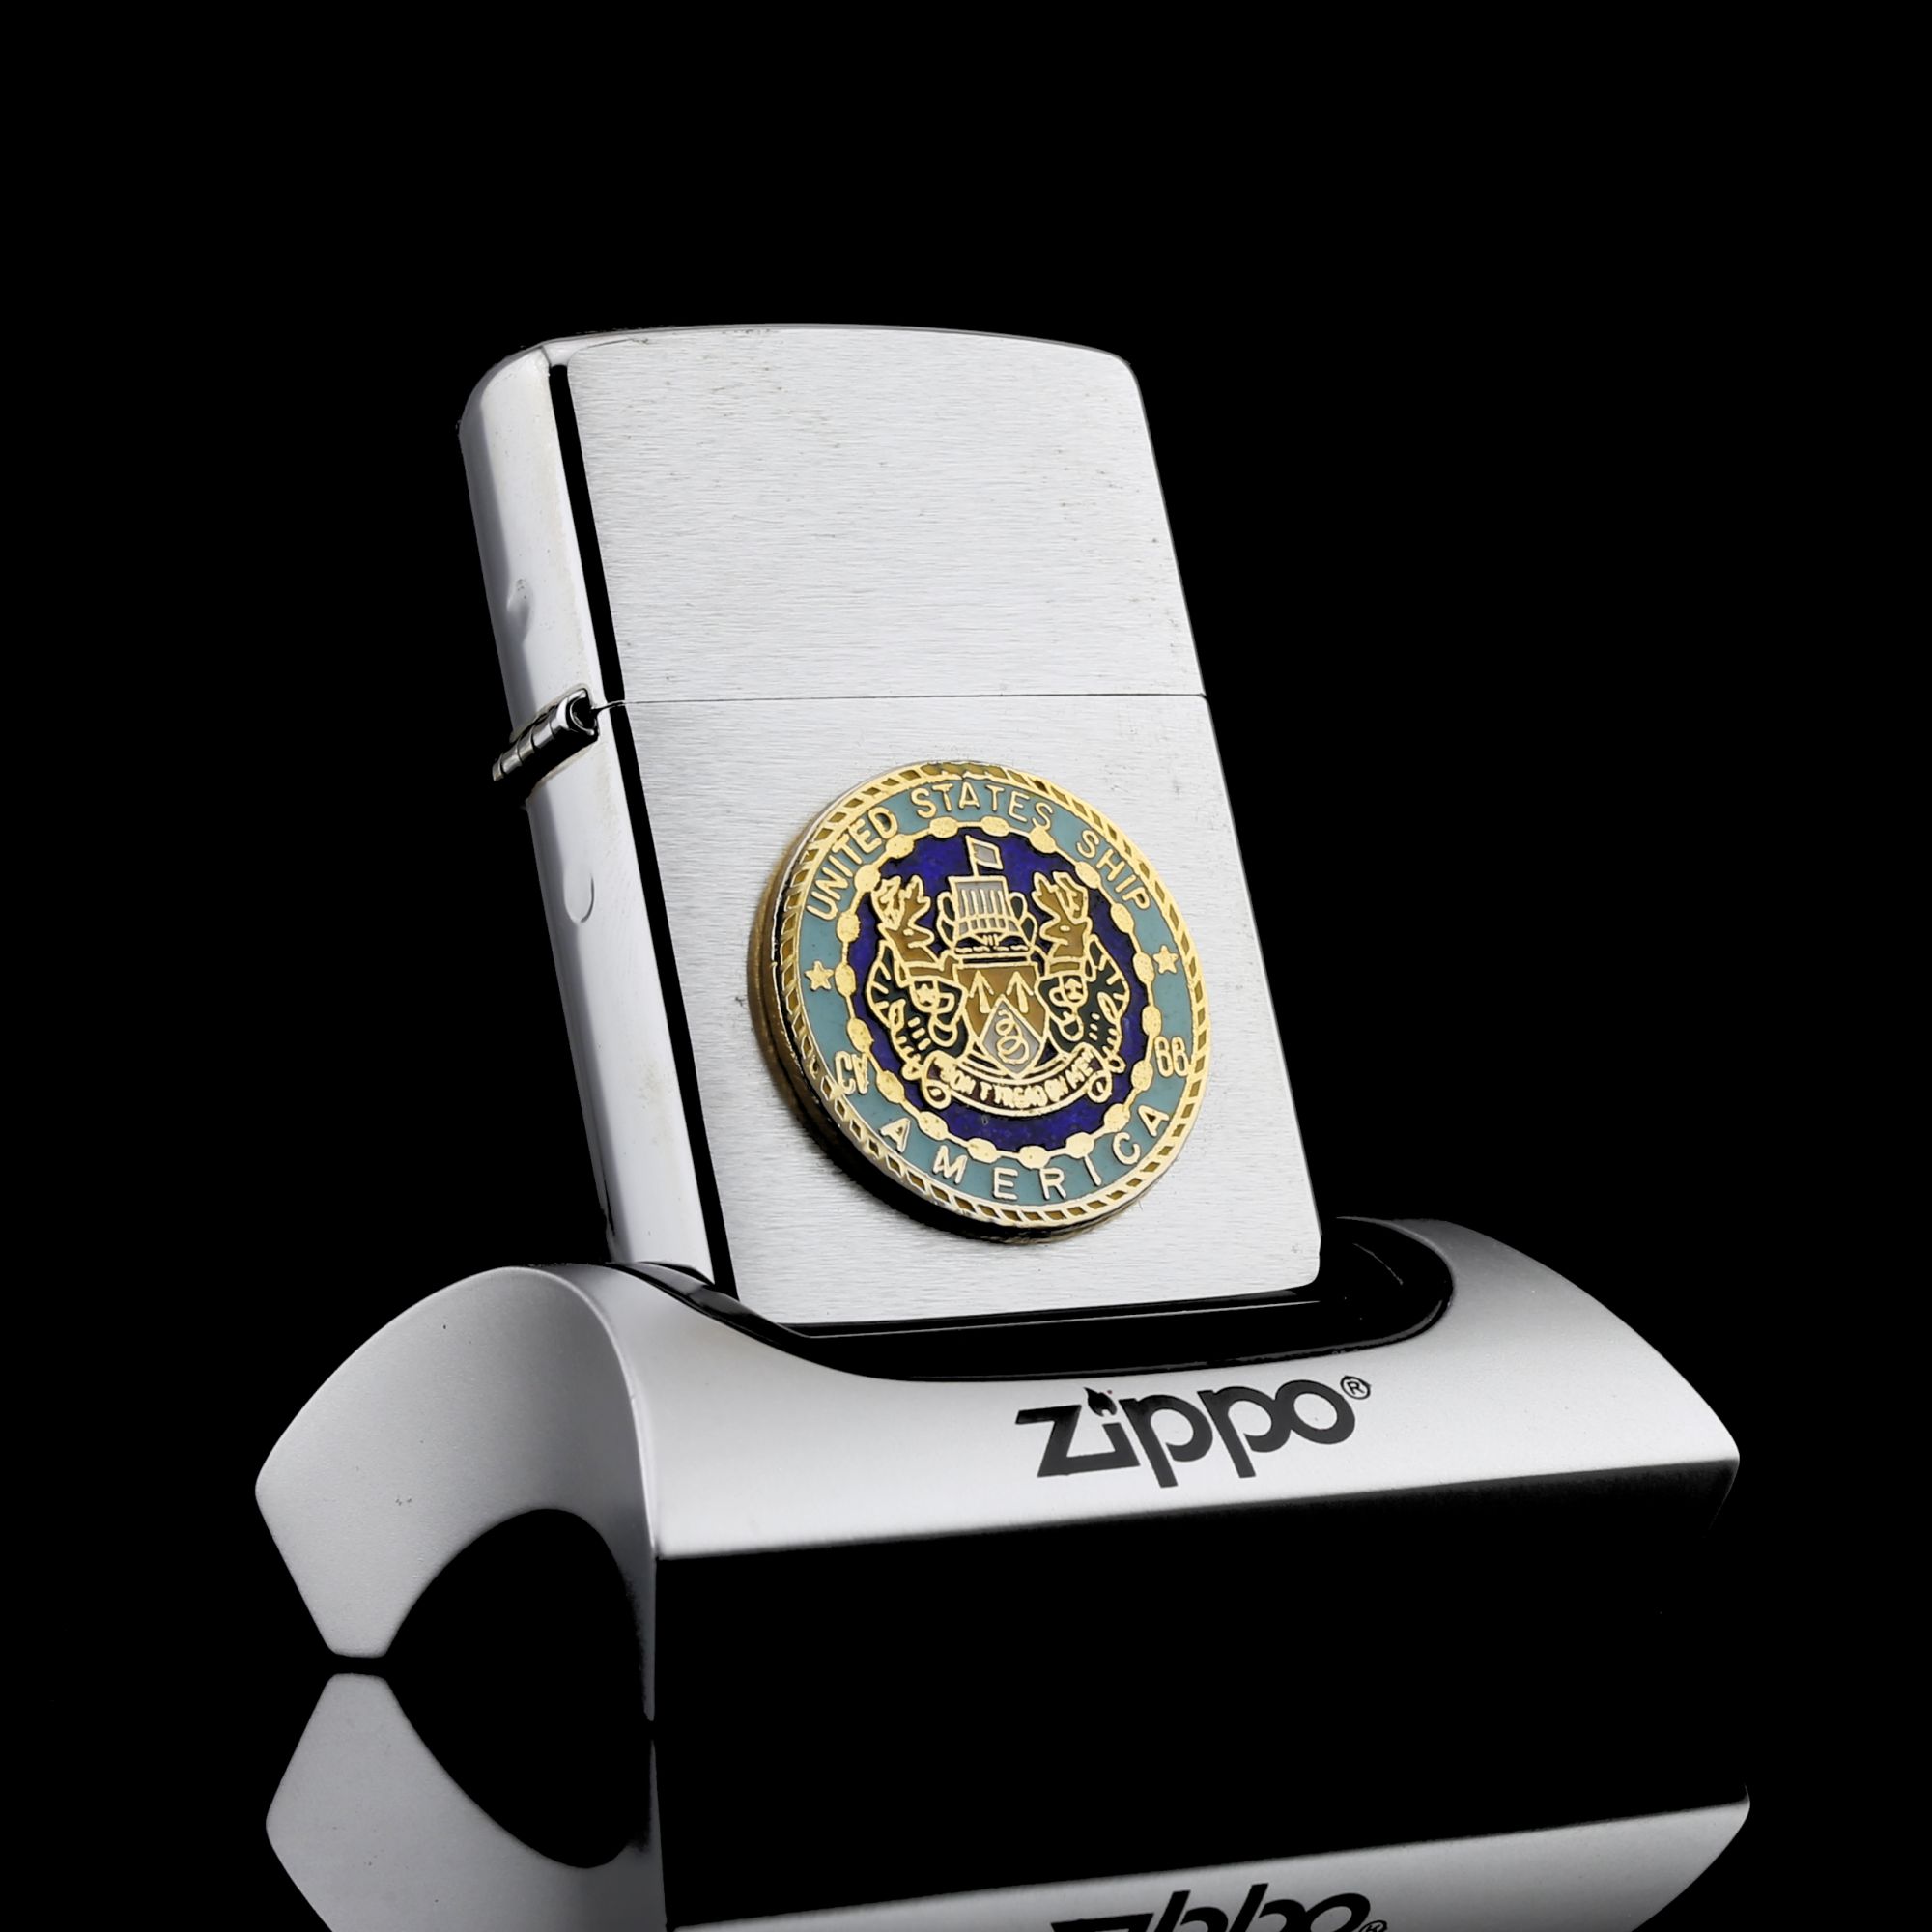 Zippo-UNITED-STATES-SHIP-AMERICA-CV-68-XVL-L-2000-don-gian-zippo-chien-tranh-gia-tri-dat-tien